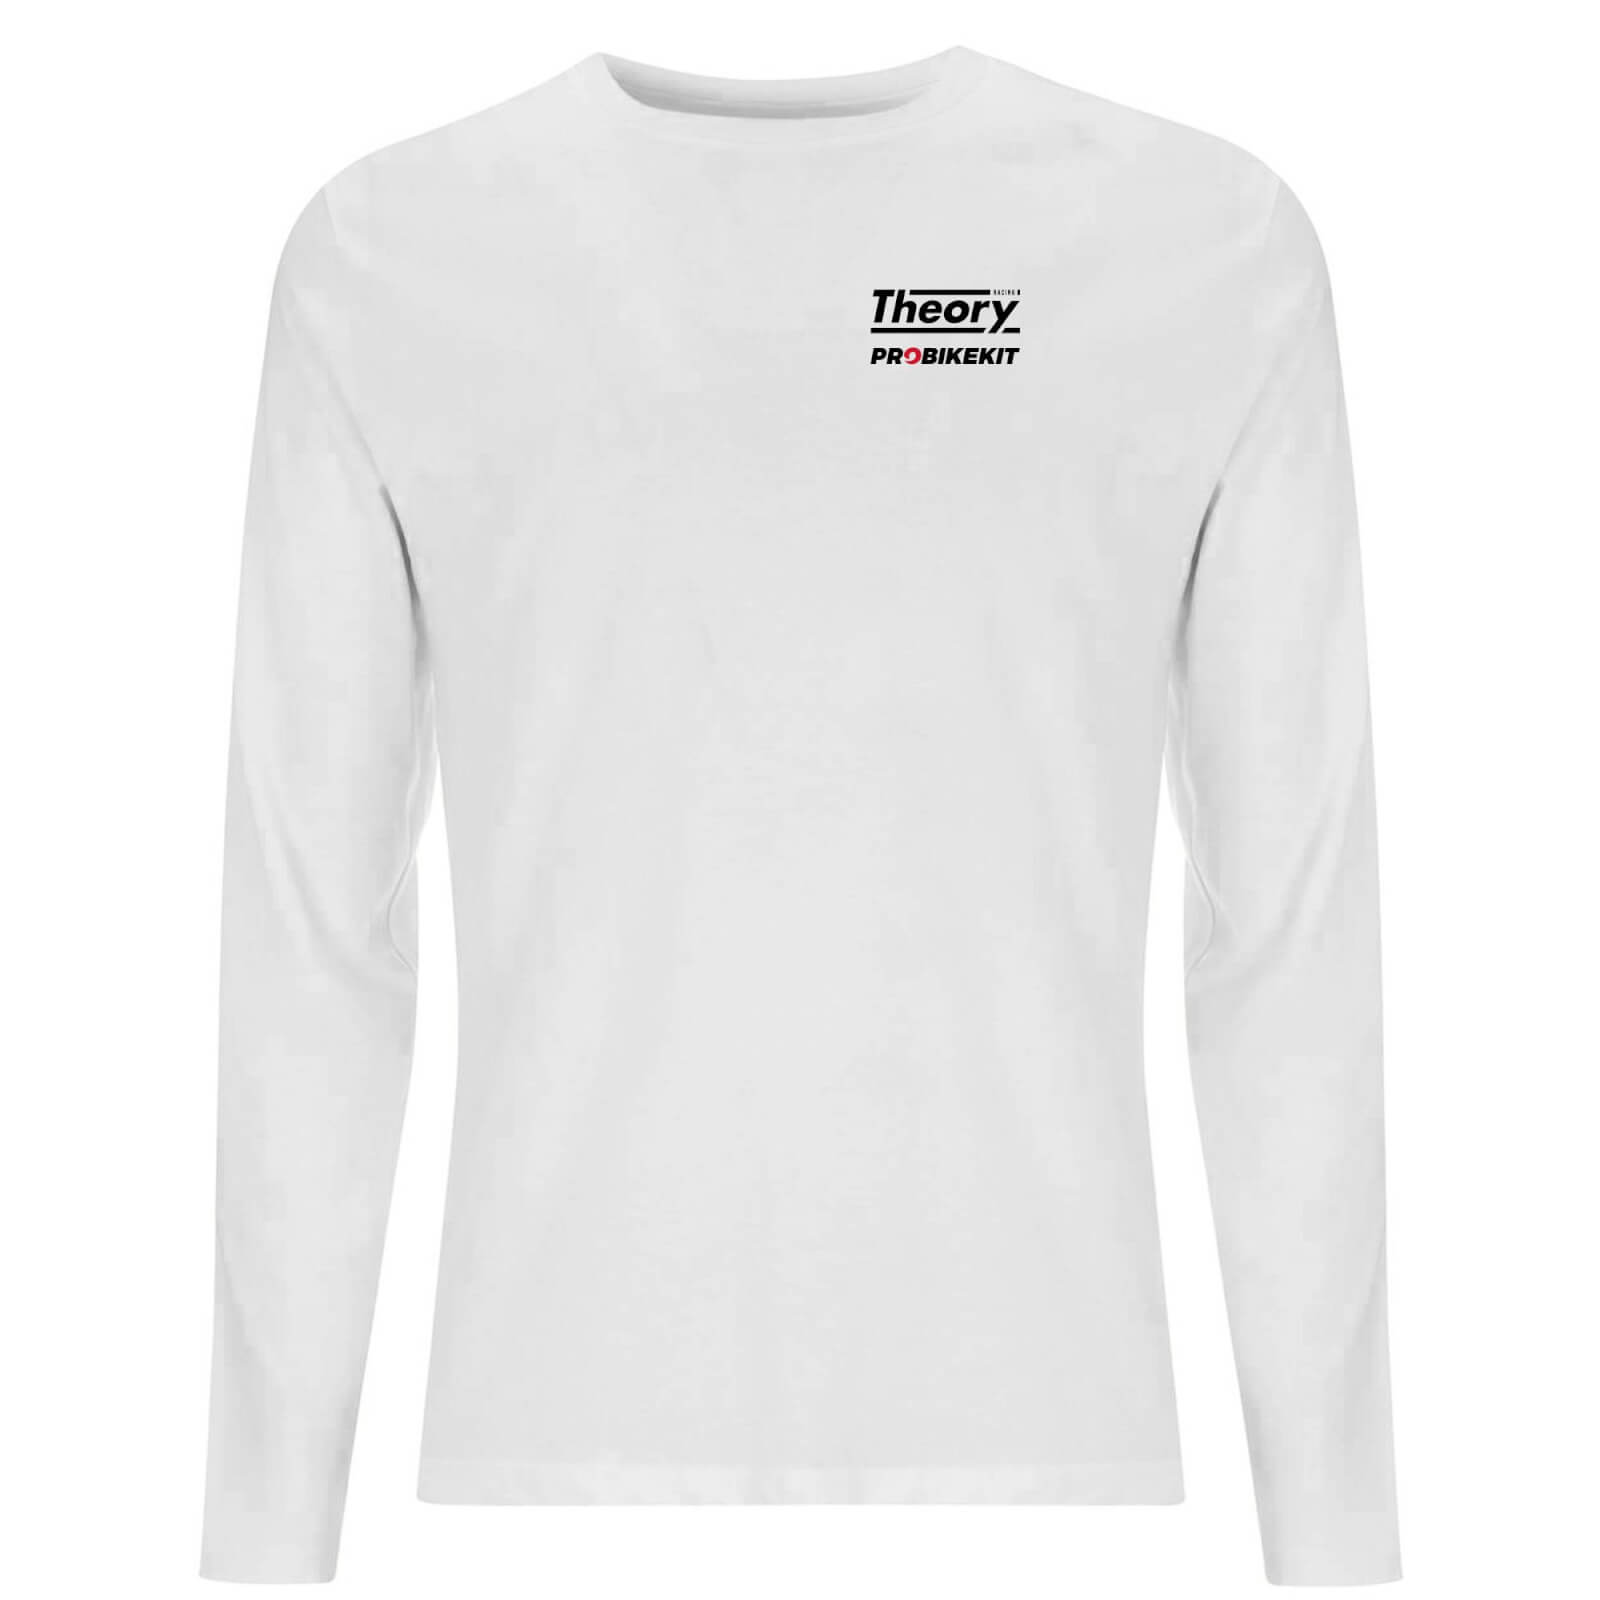 PBK Theory Logo Pocket Print Men's Long Sleeve T-Shirt - White - XS - White